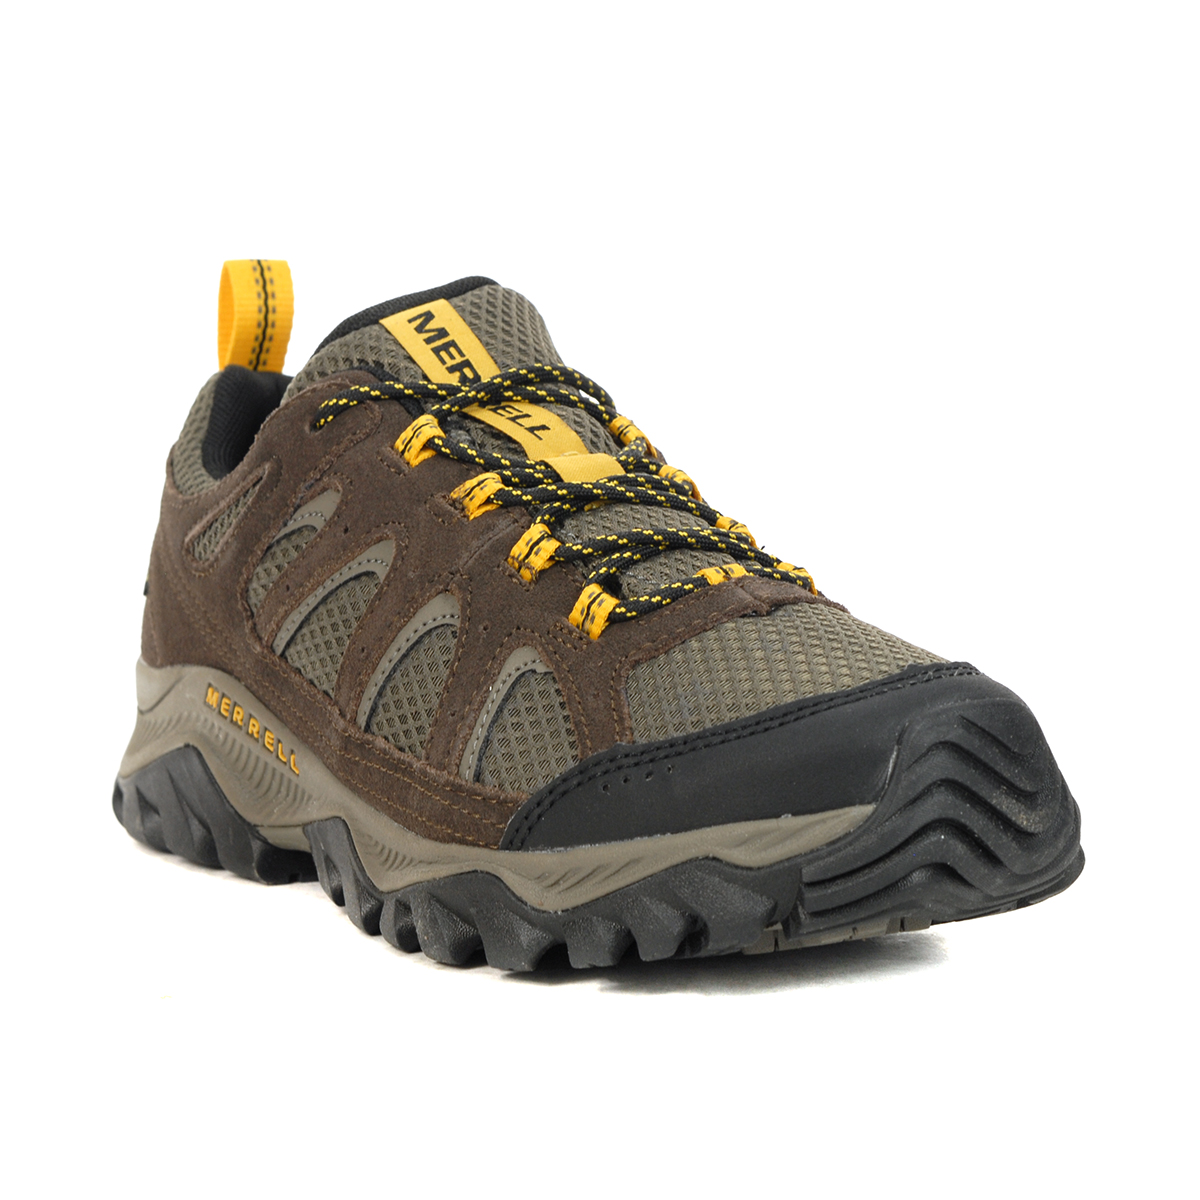 Merrell Men's Oakcreek Espresso Trail Shoes J036403 - WOOKI.COM